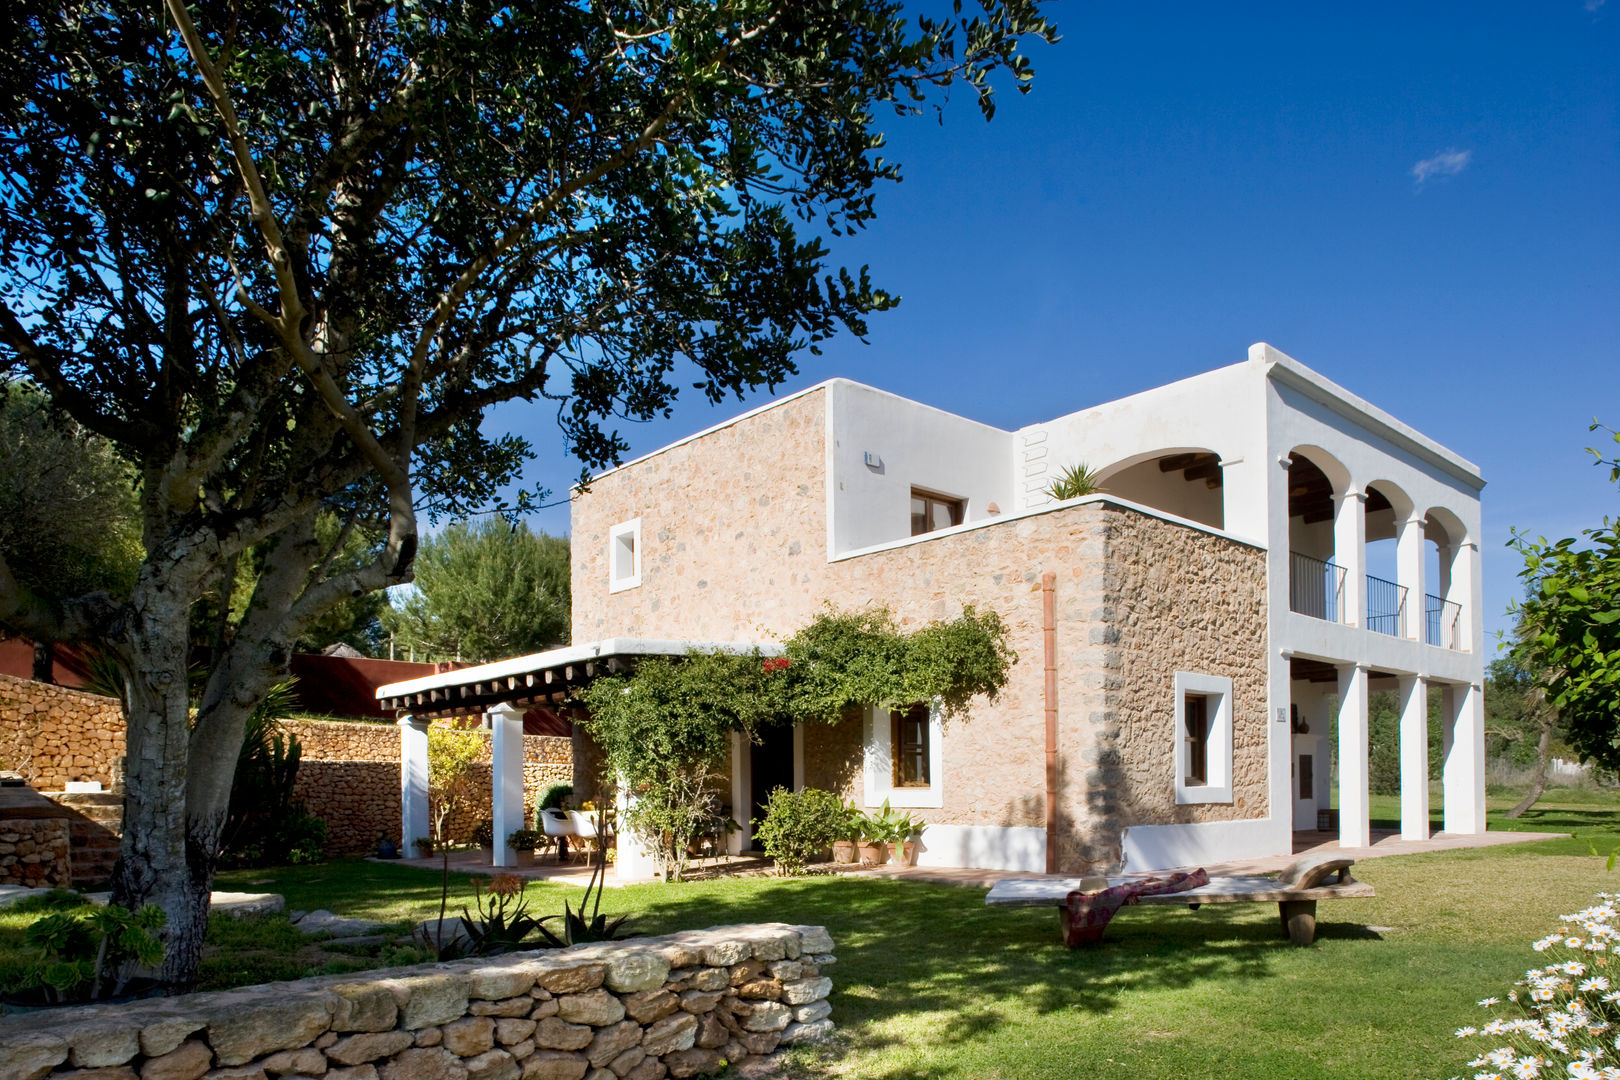 Casa en Ibiza, recdi8 recdi8 Country style houses